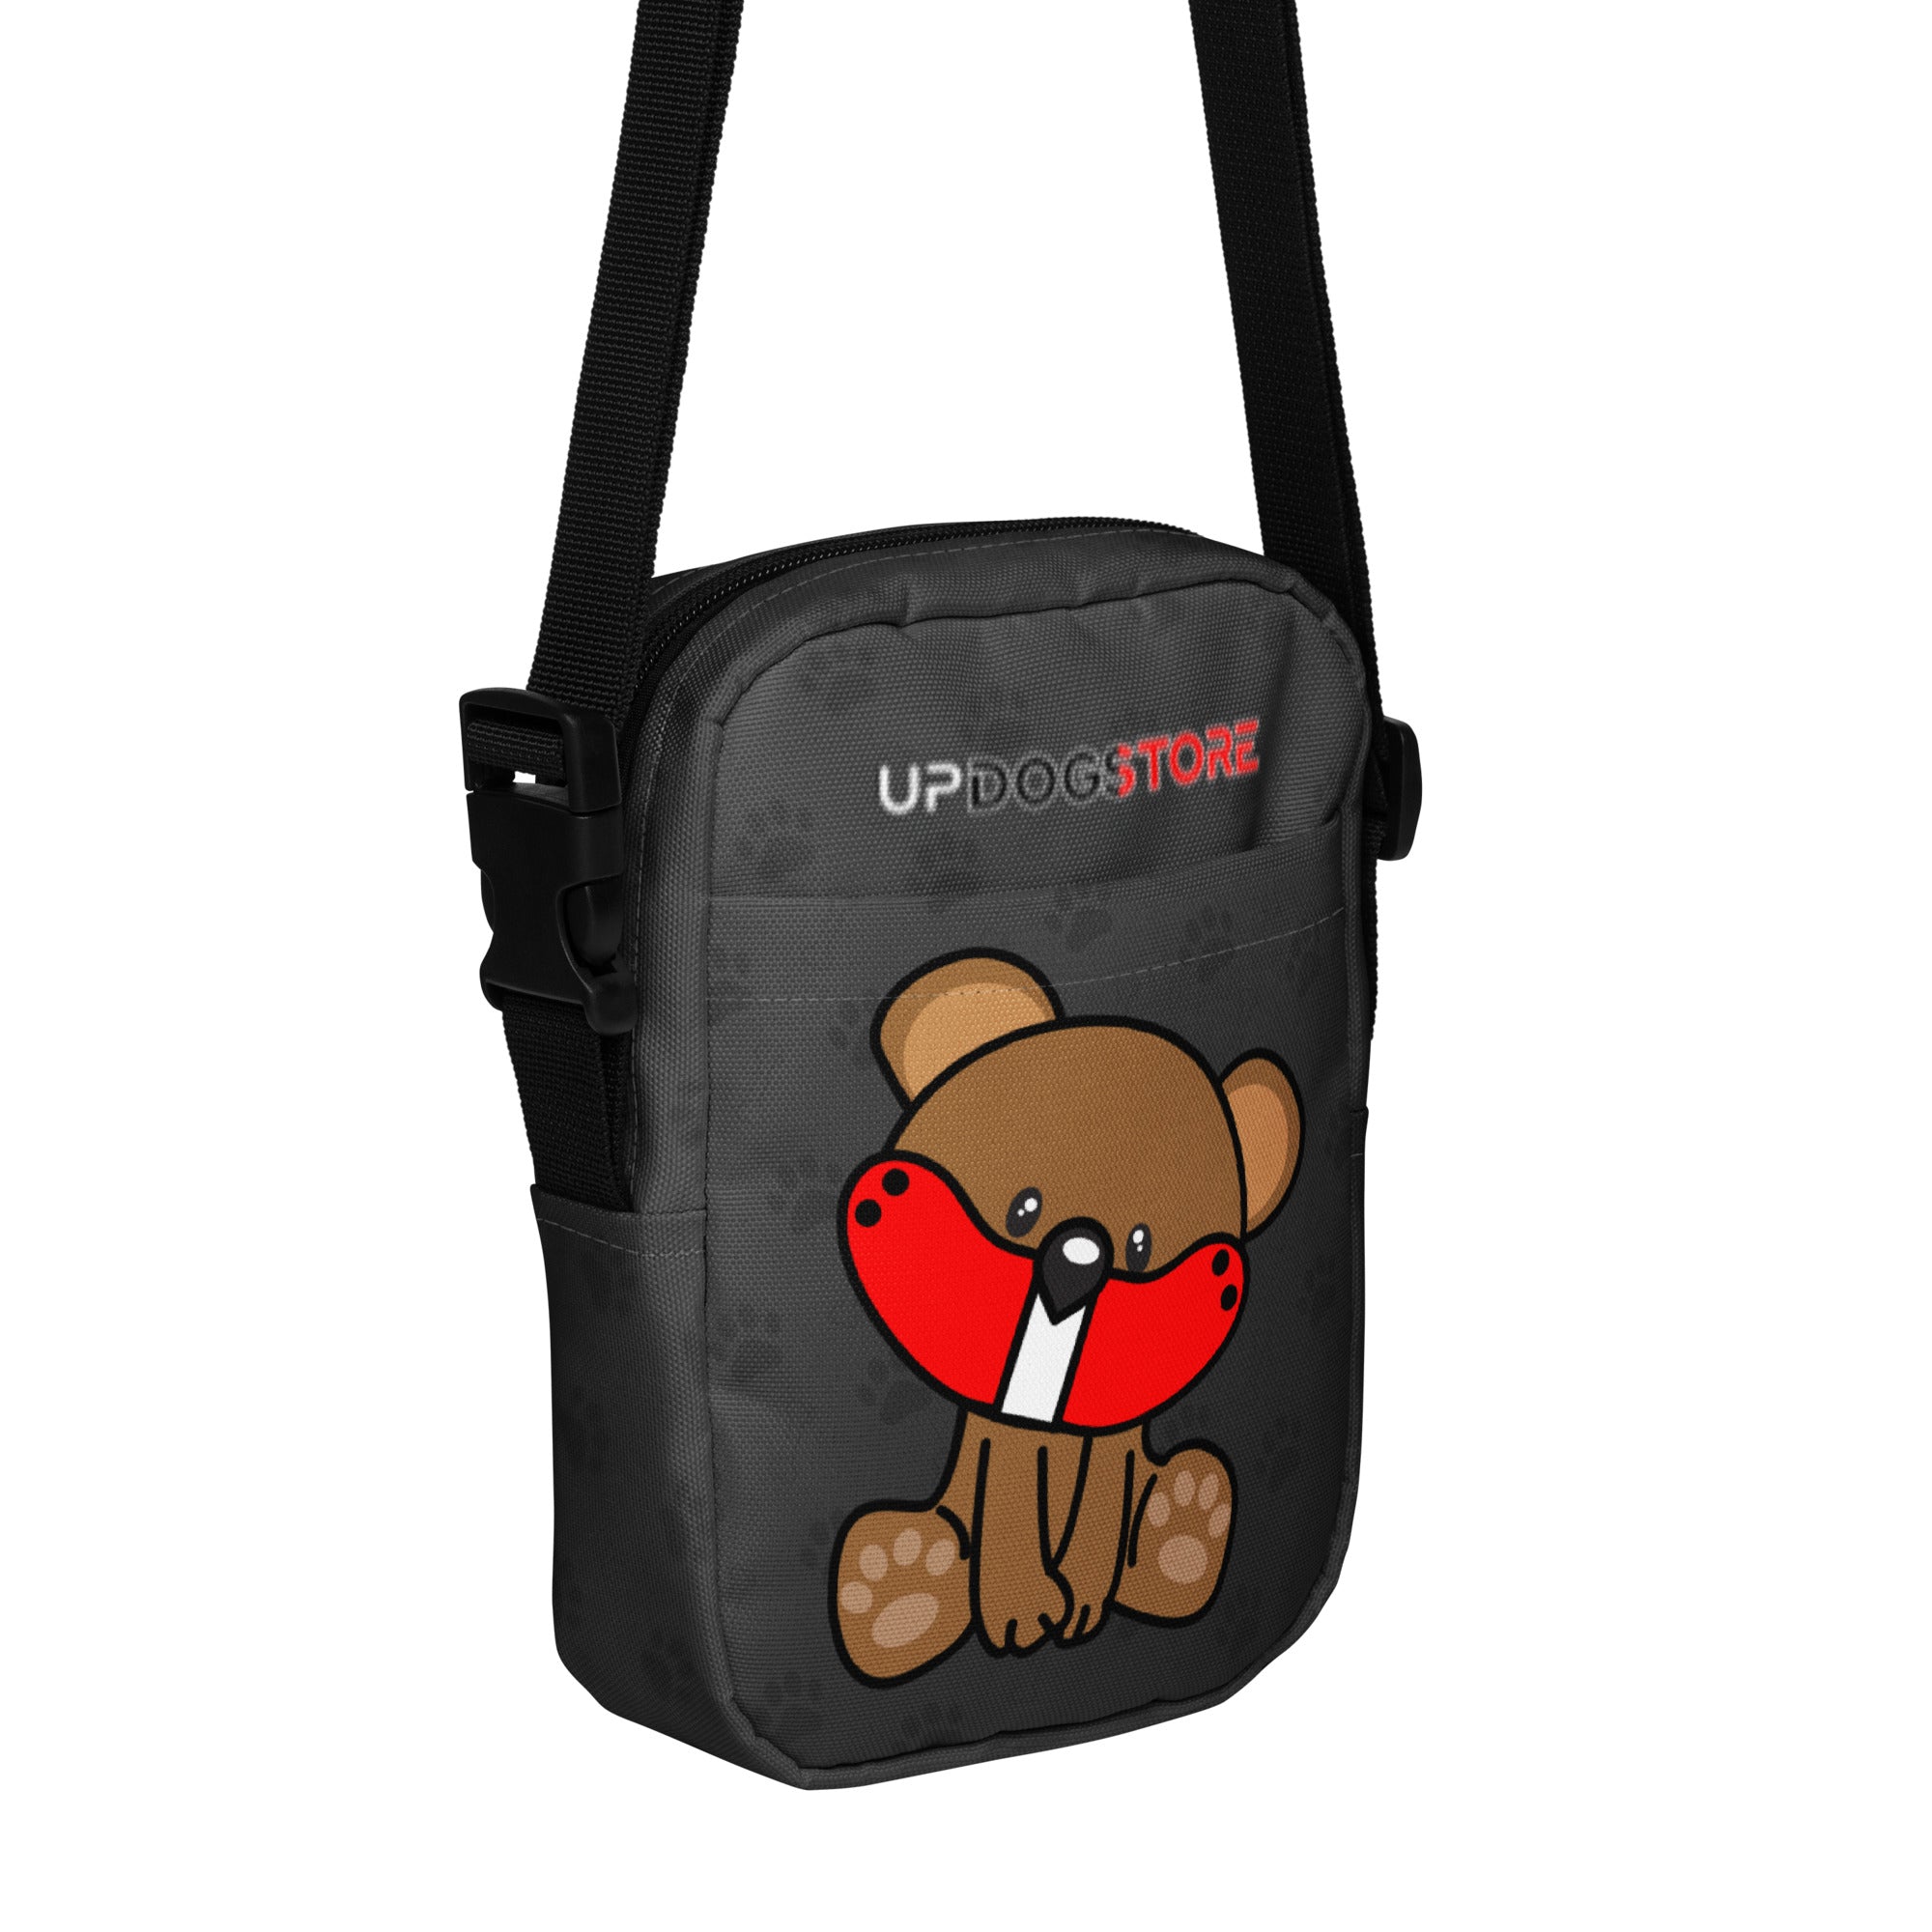 I am a PuppyBear / Shoulder Bag / Customize